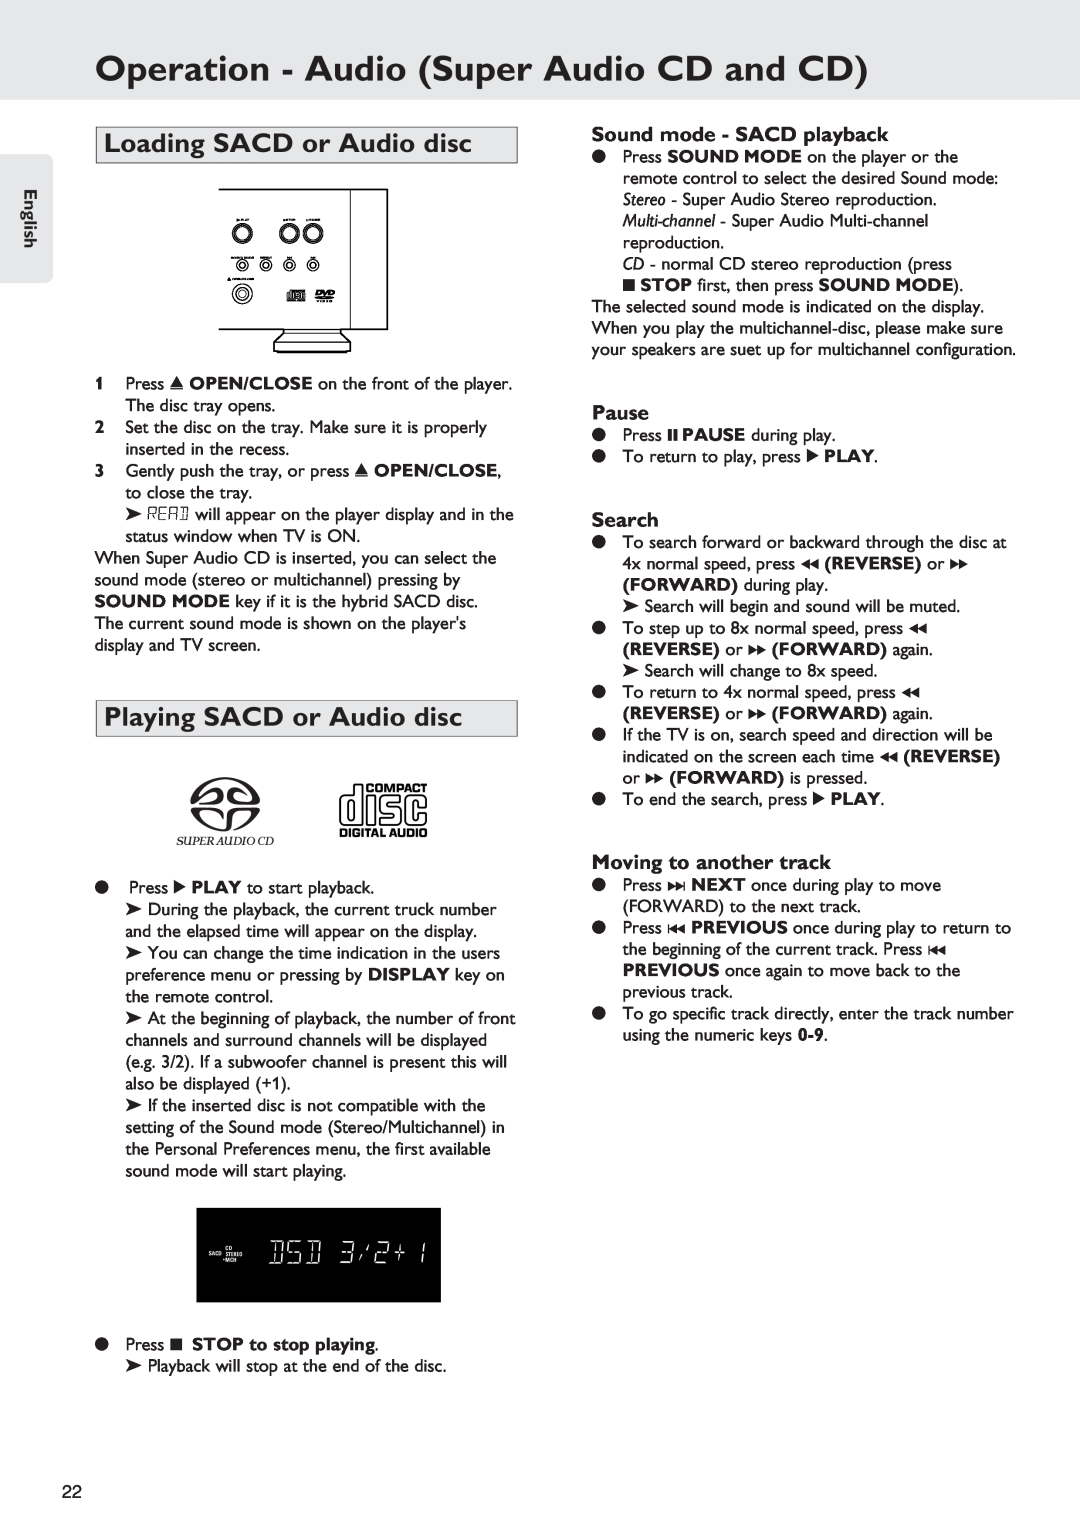 Marantz SA-12S1 Operation - Audio Super Audio CD and CD, Loading SACD or Audio disc, Playing SACD or Audio disc, English 